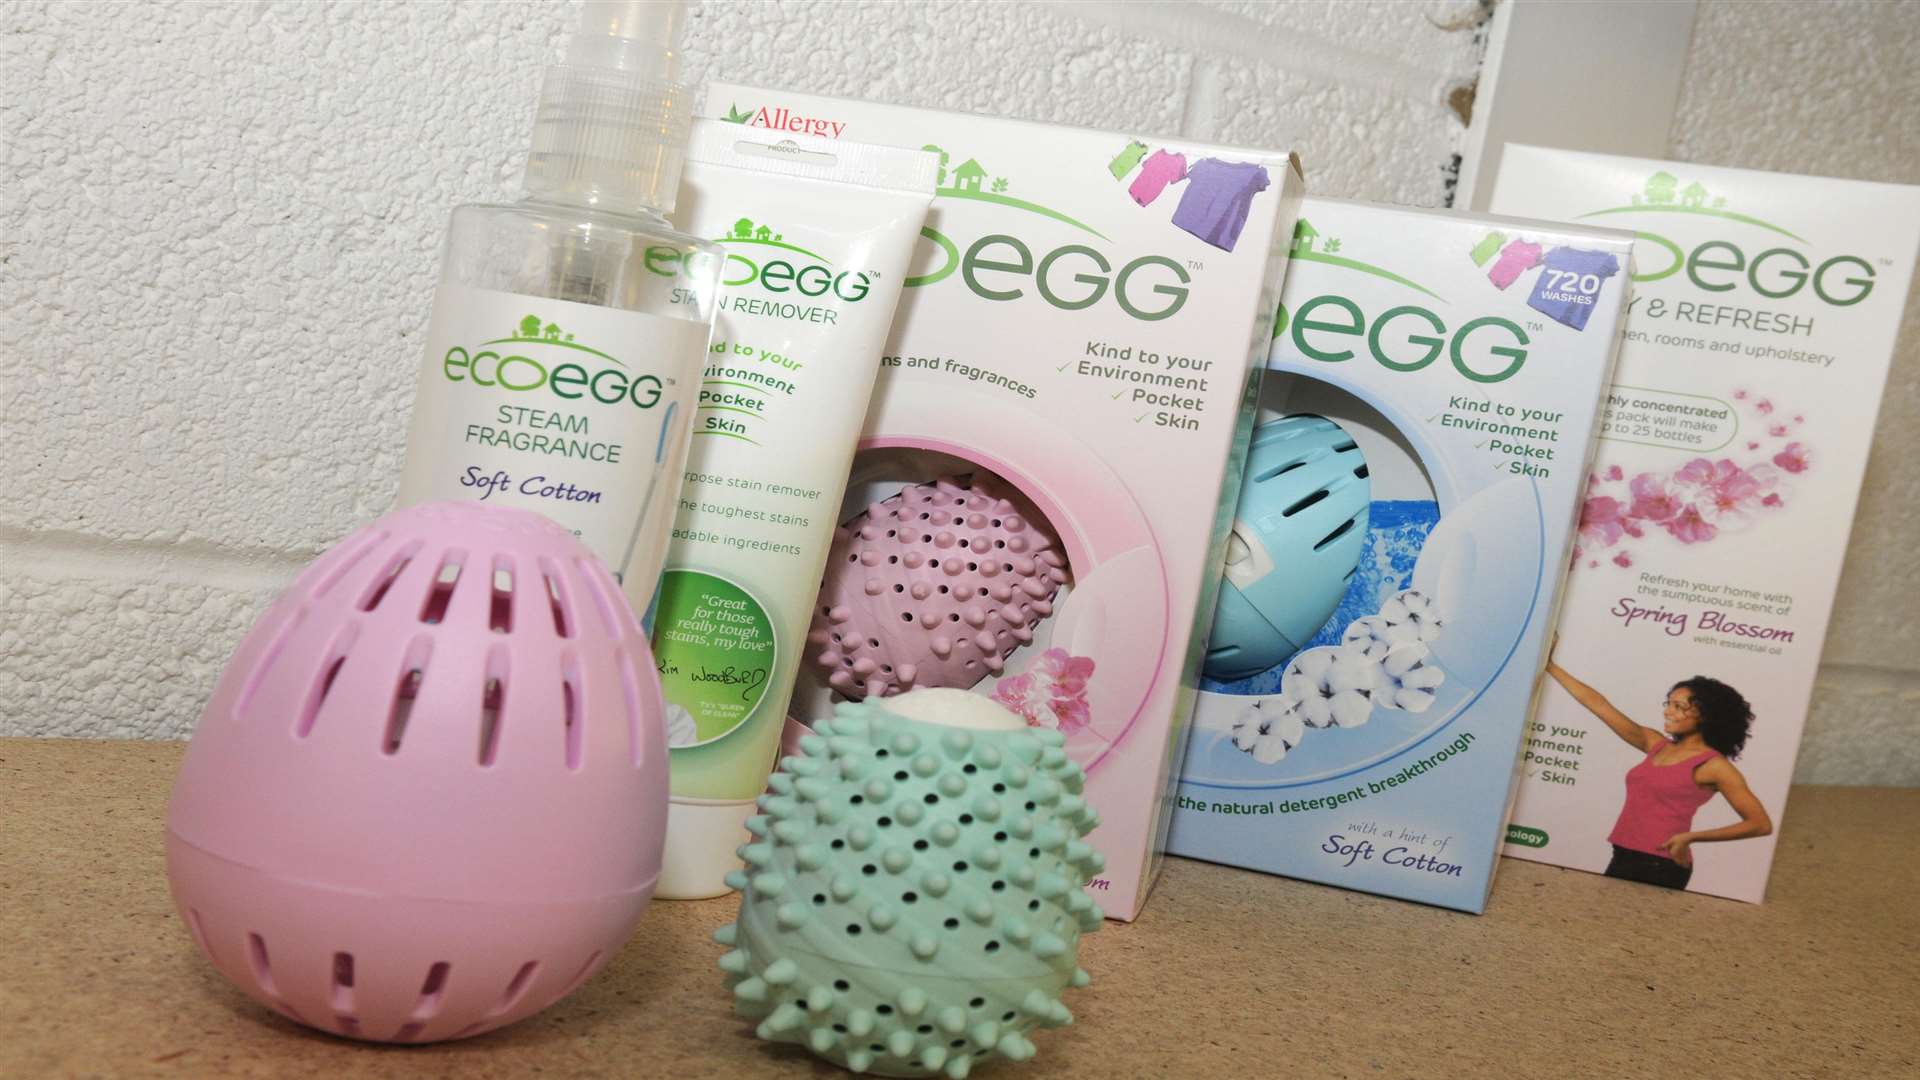 Ecoegg products